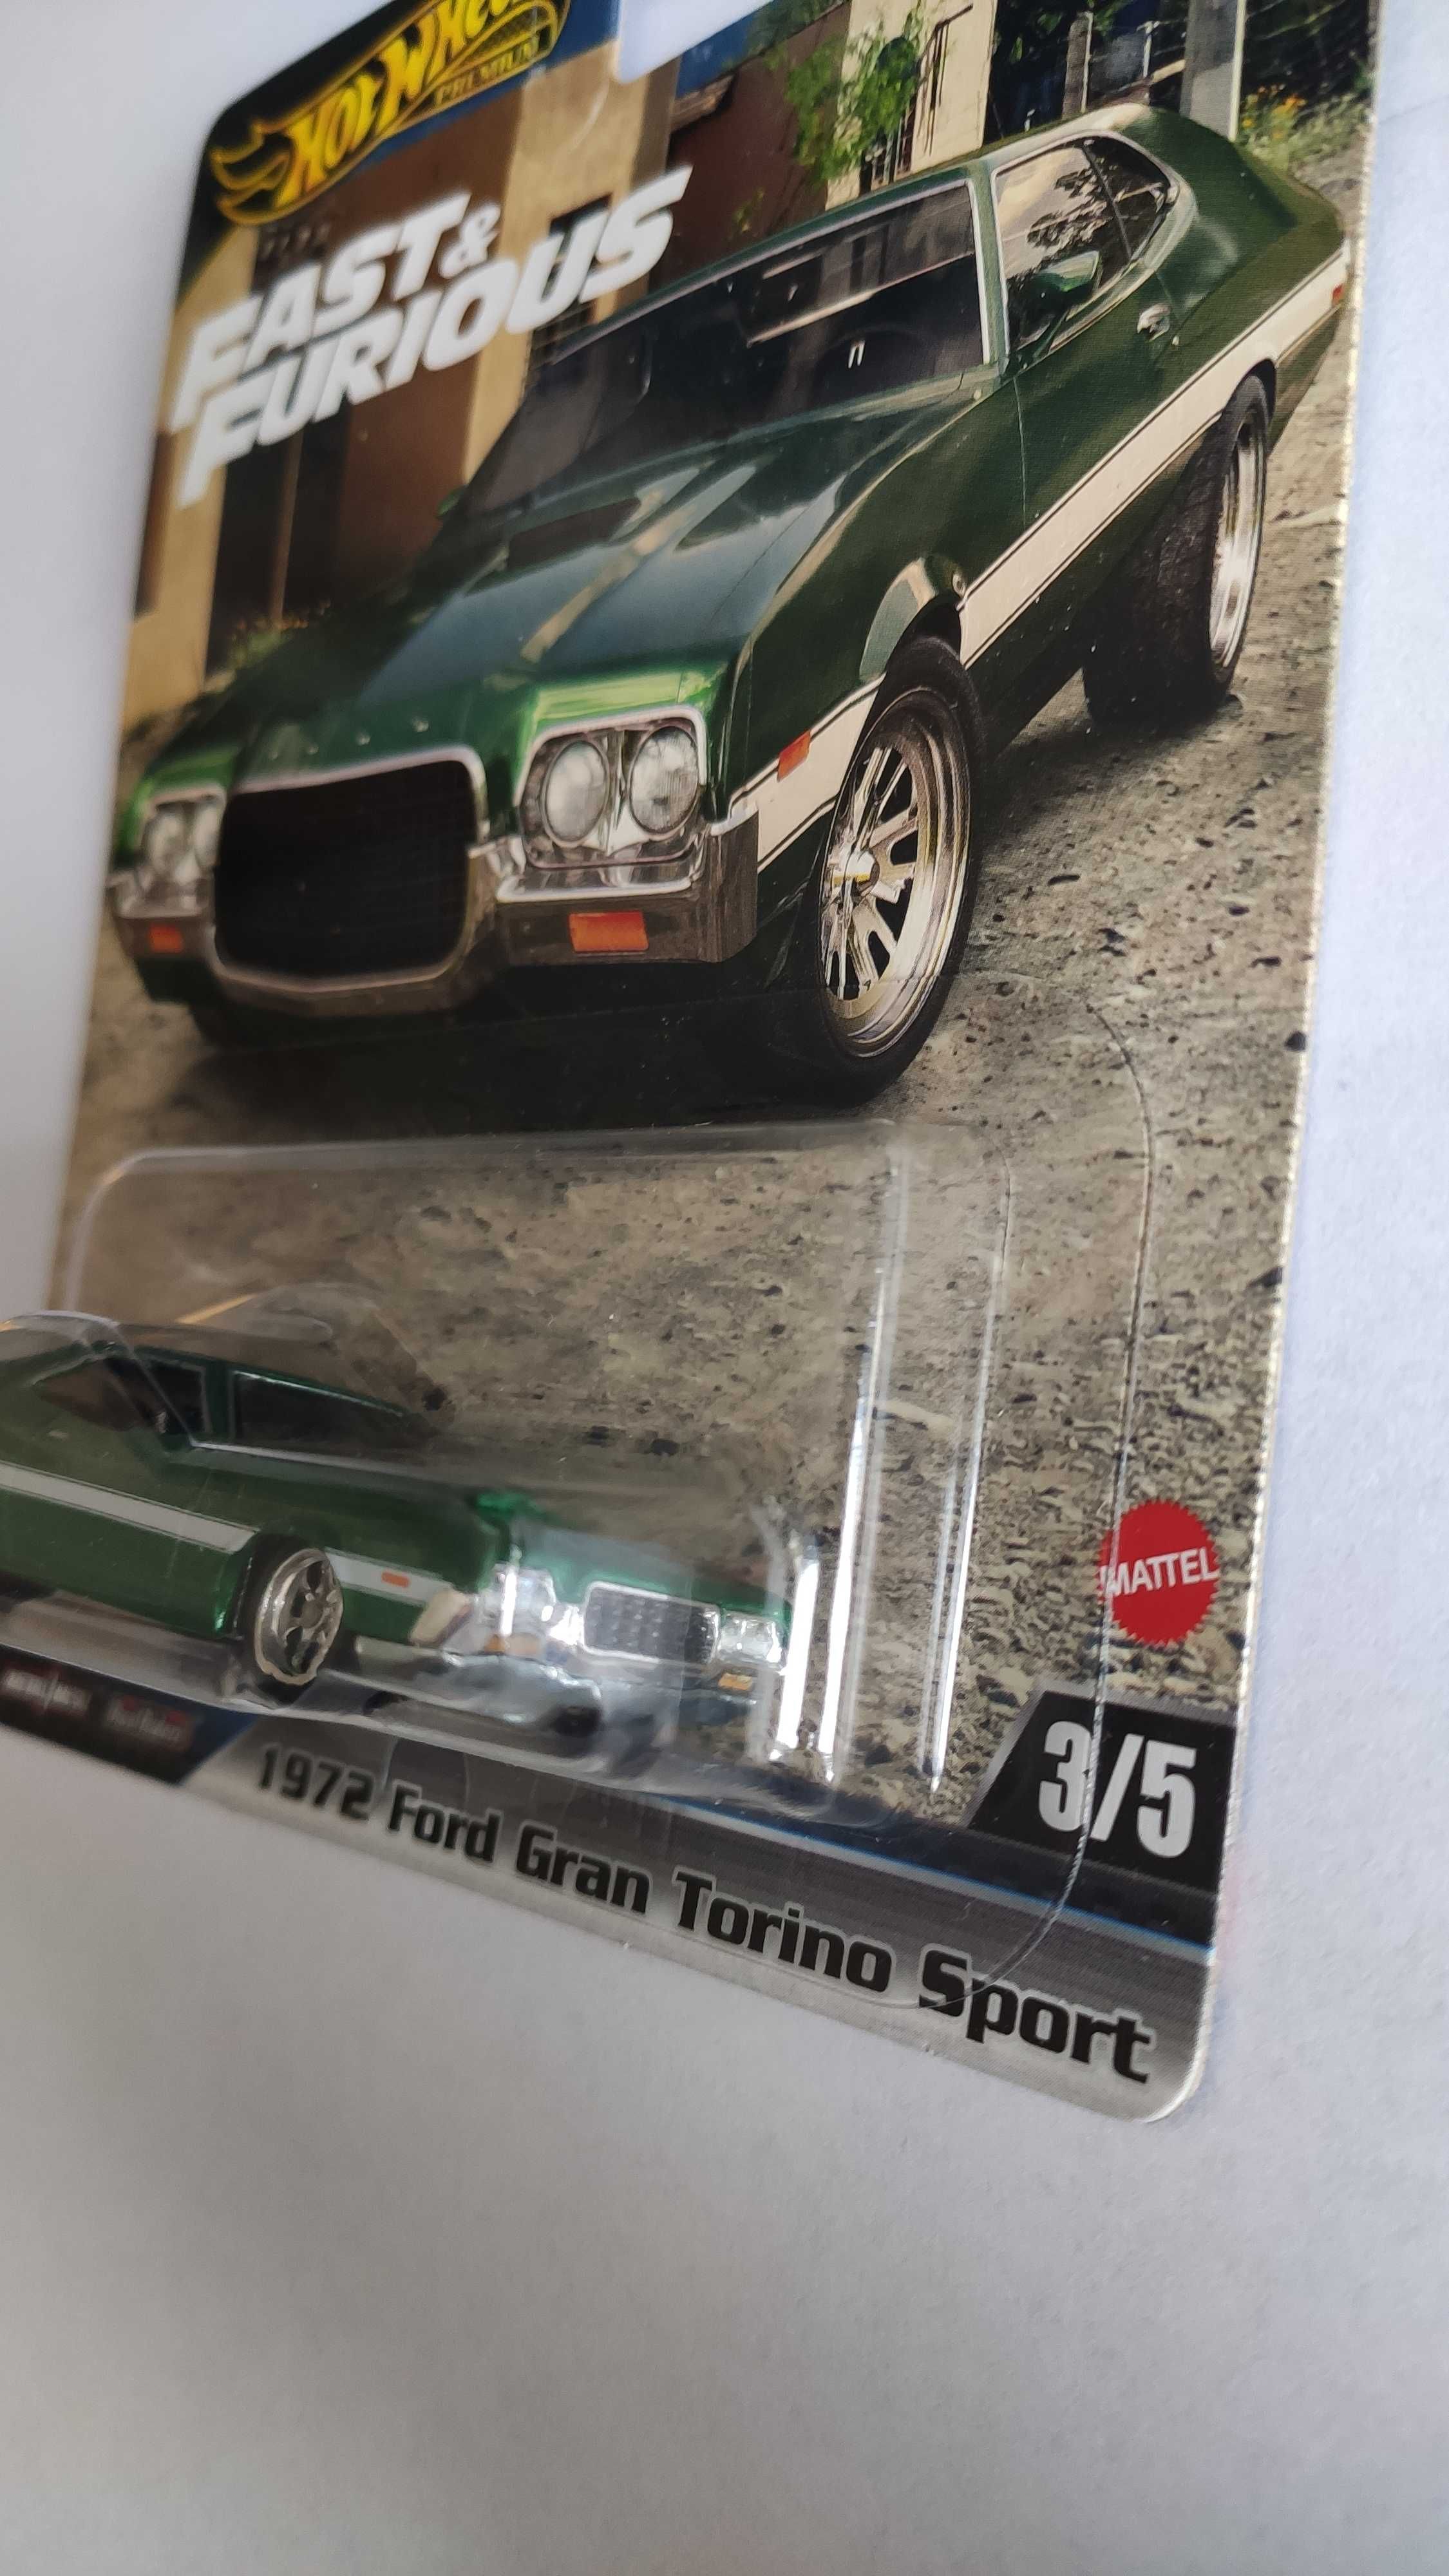 Hot Wheels Premium Fast & Furious 1972 Ford Gran Torino Sport